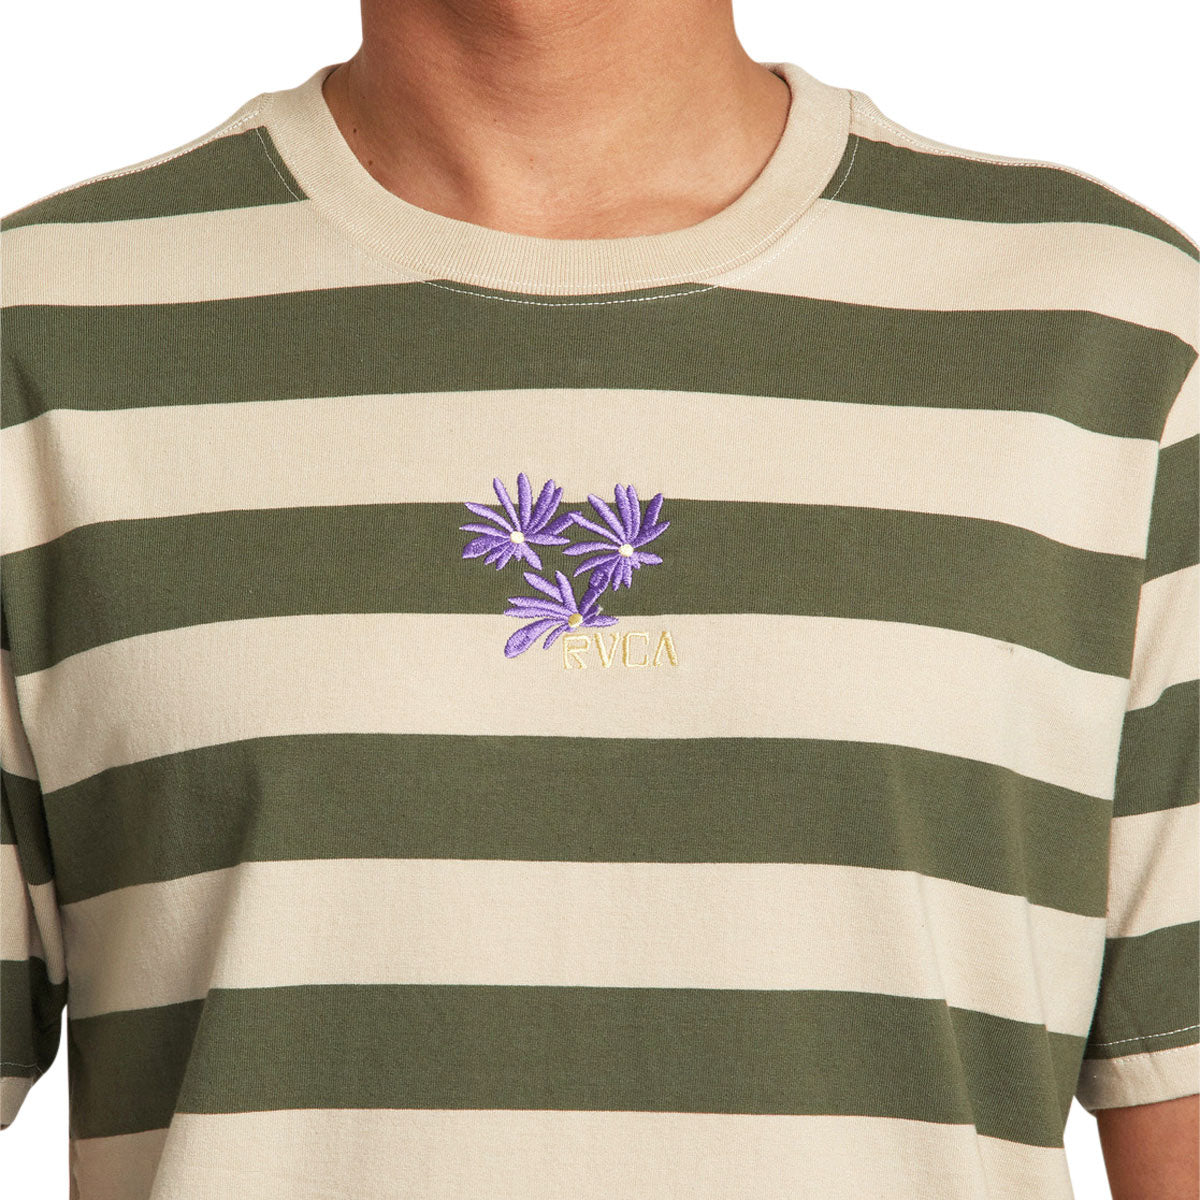 RVCA Corso Stripe Shirt - Aloe image 2